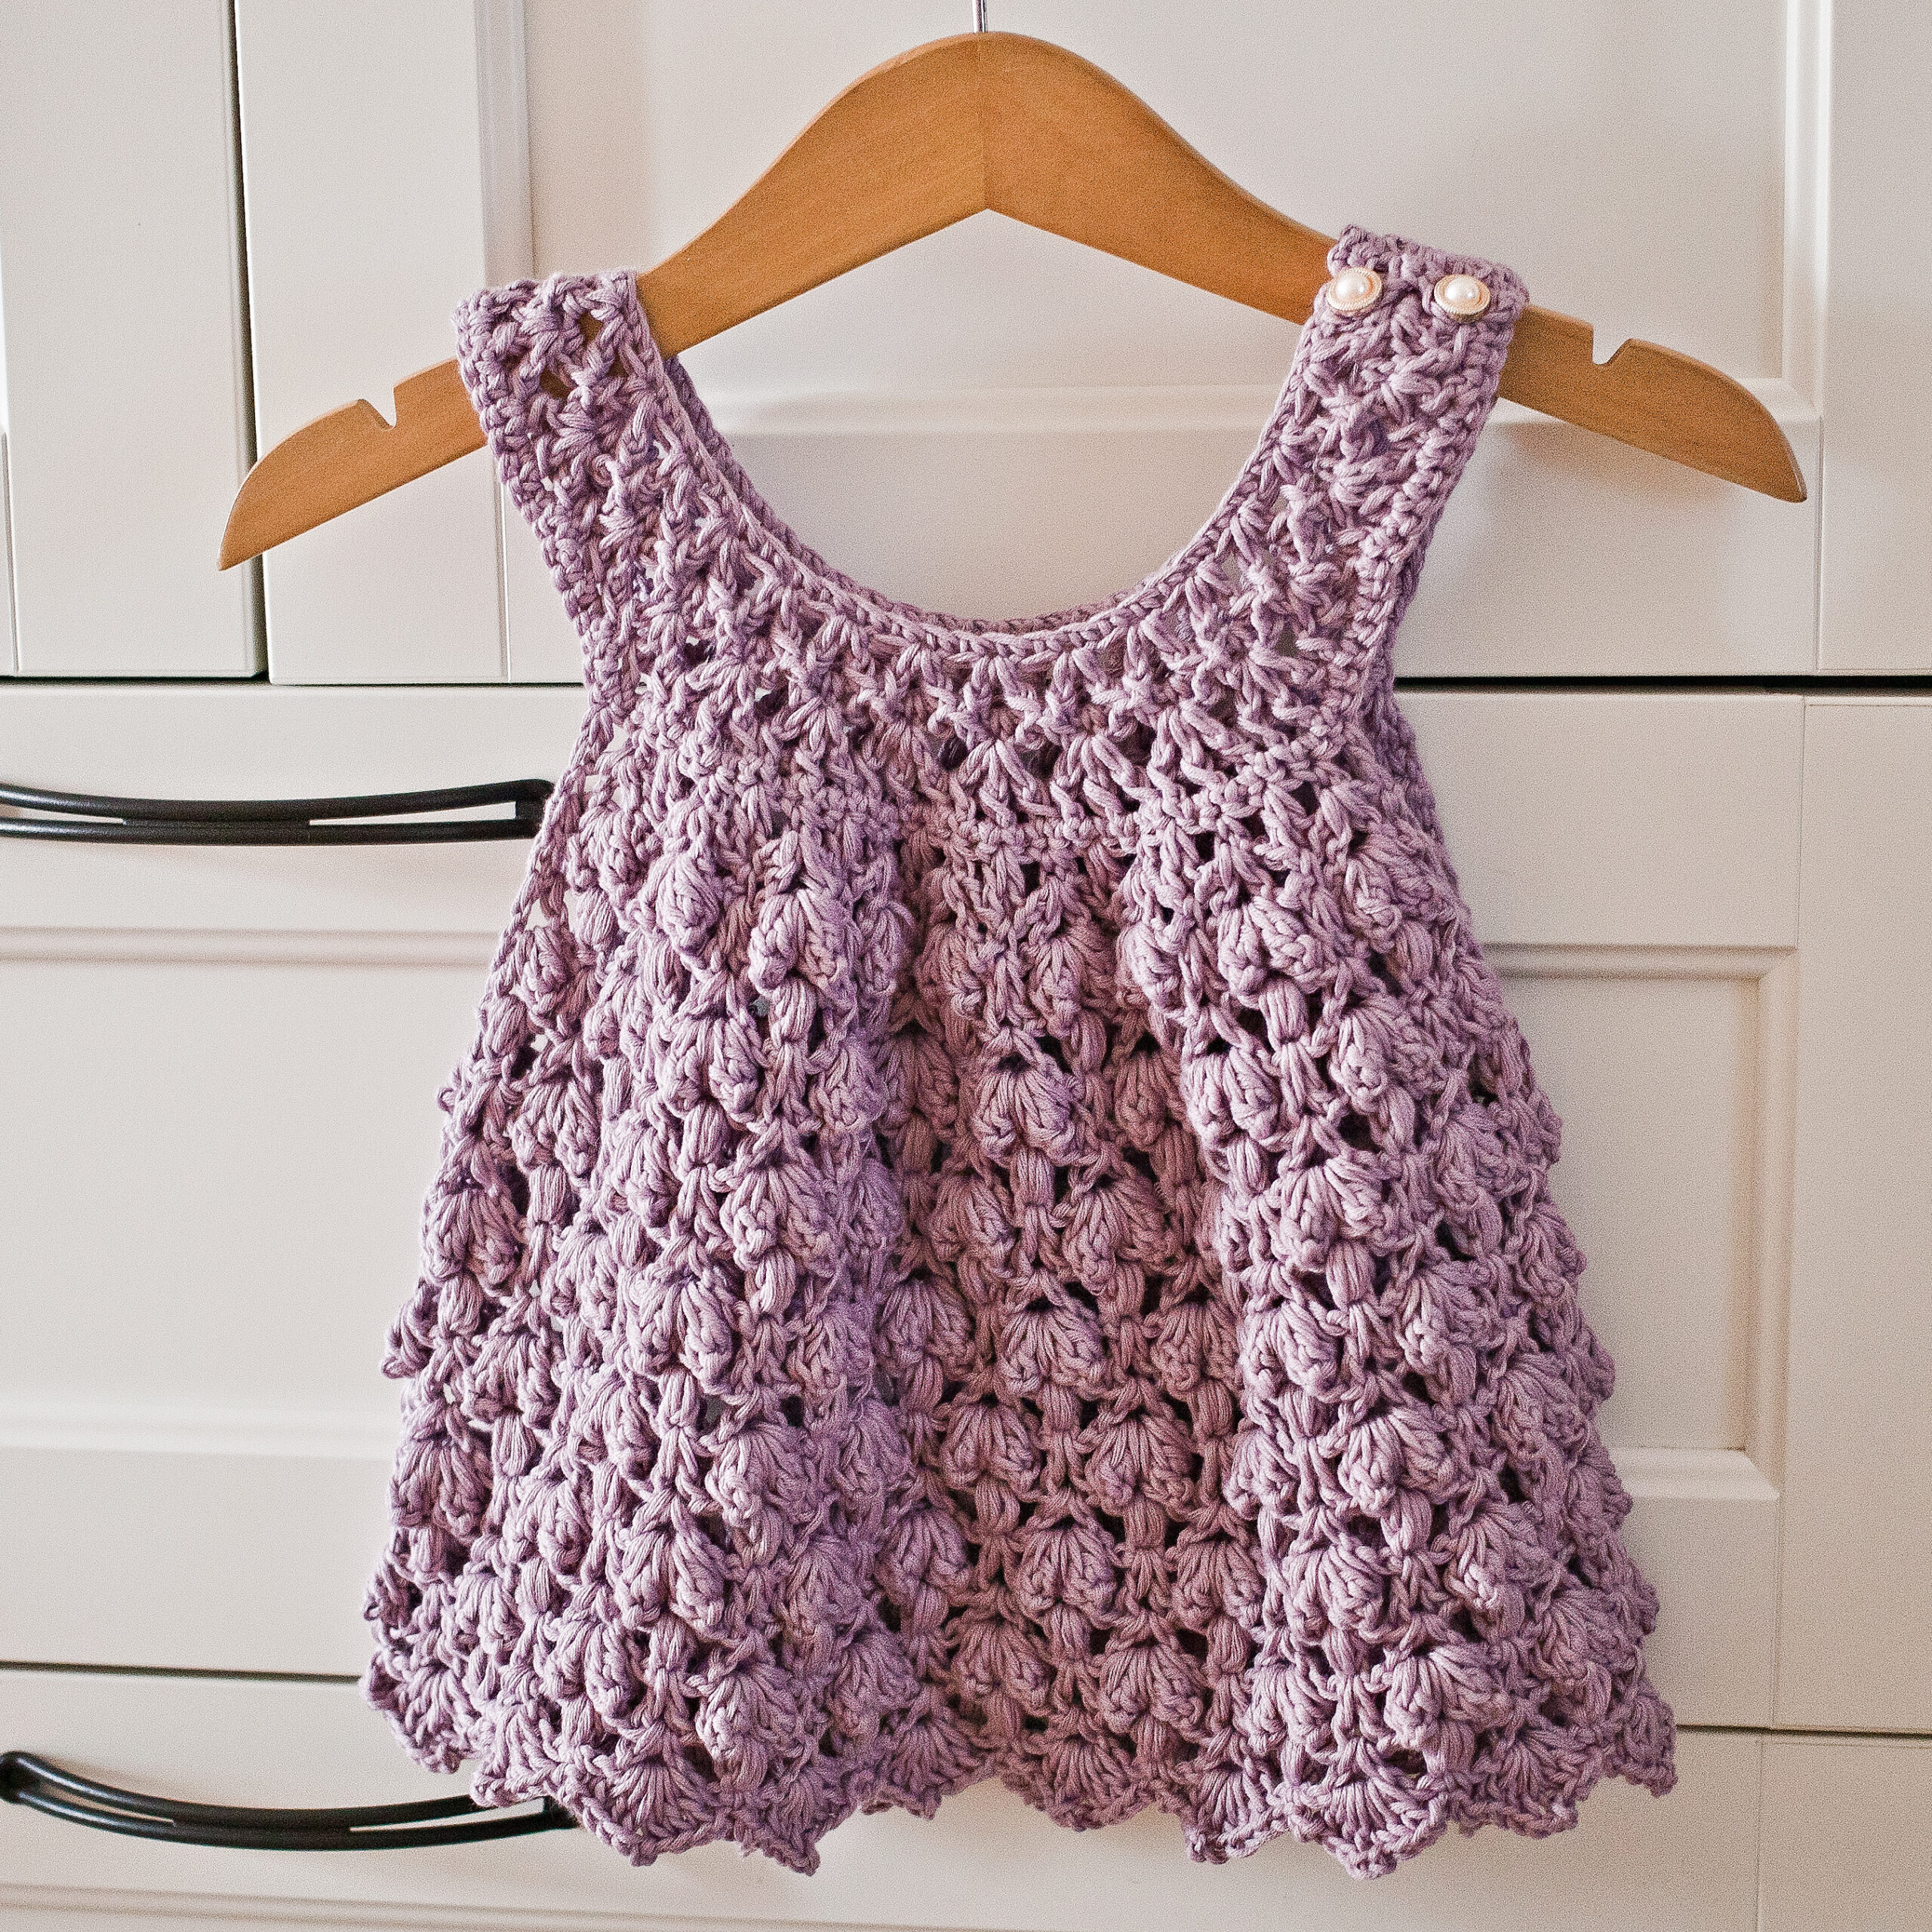 New crochet Candytuft Dress pattern!